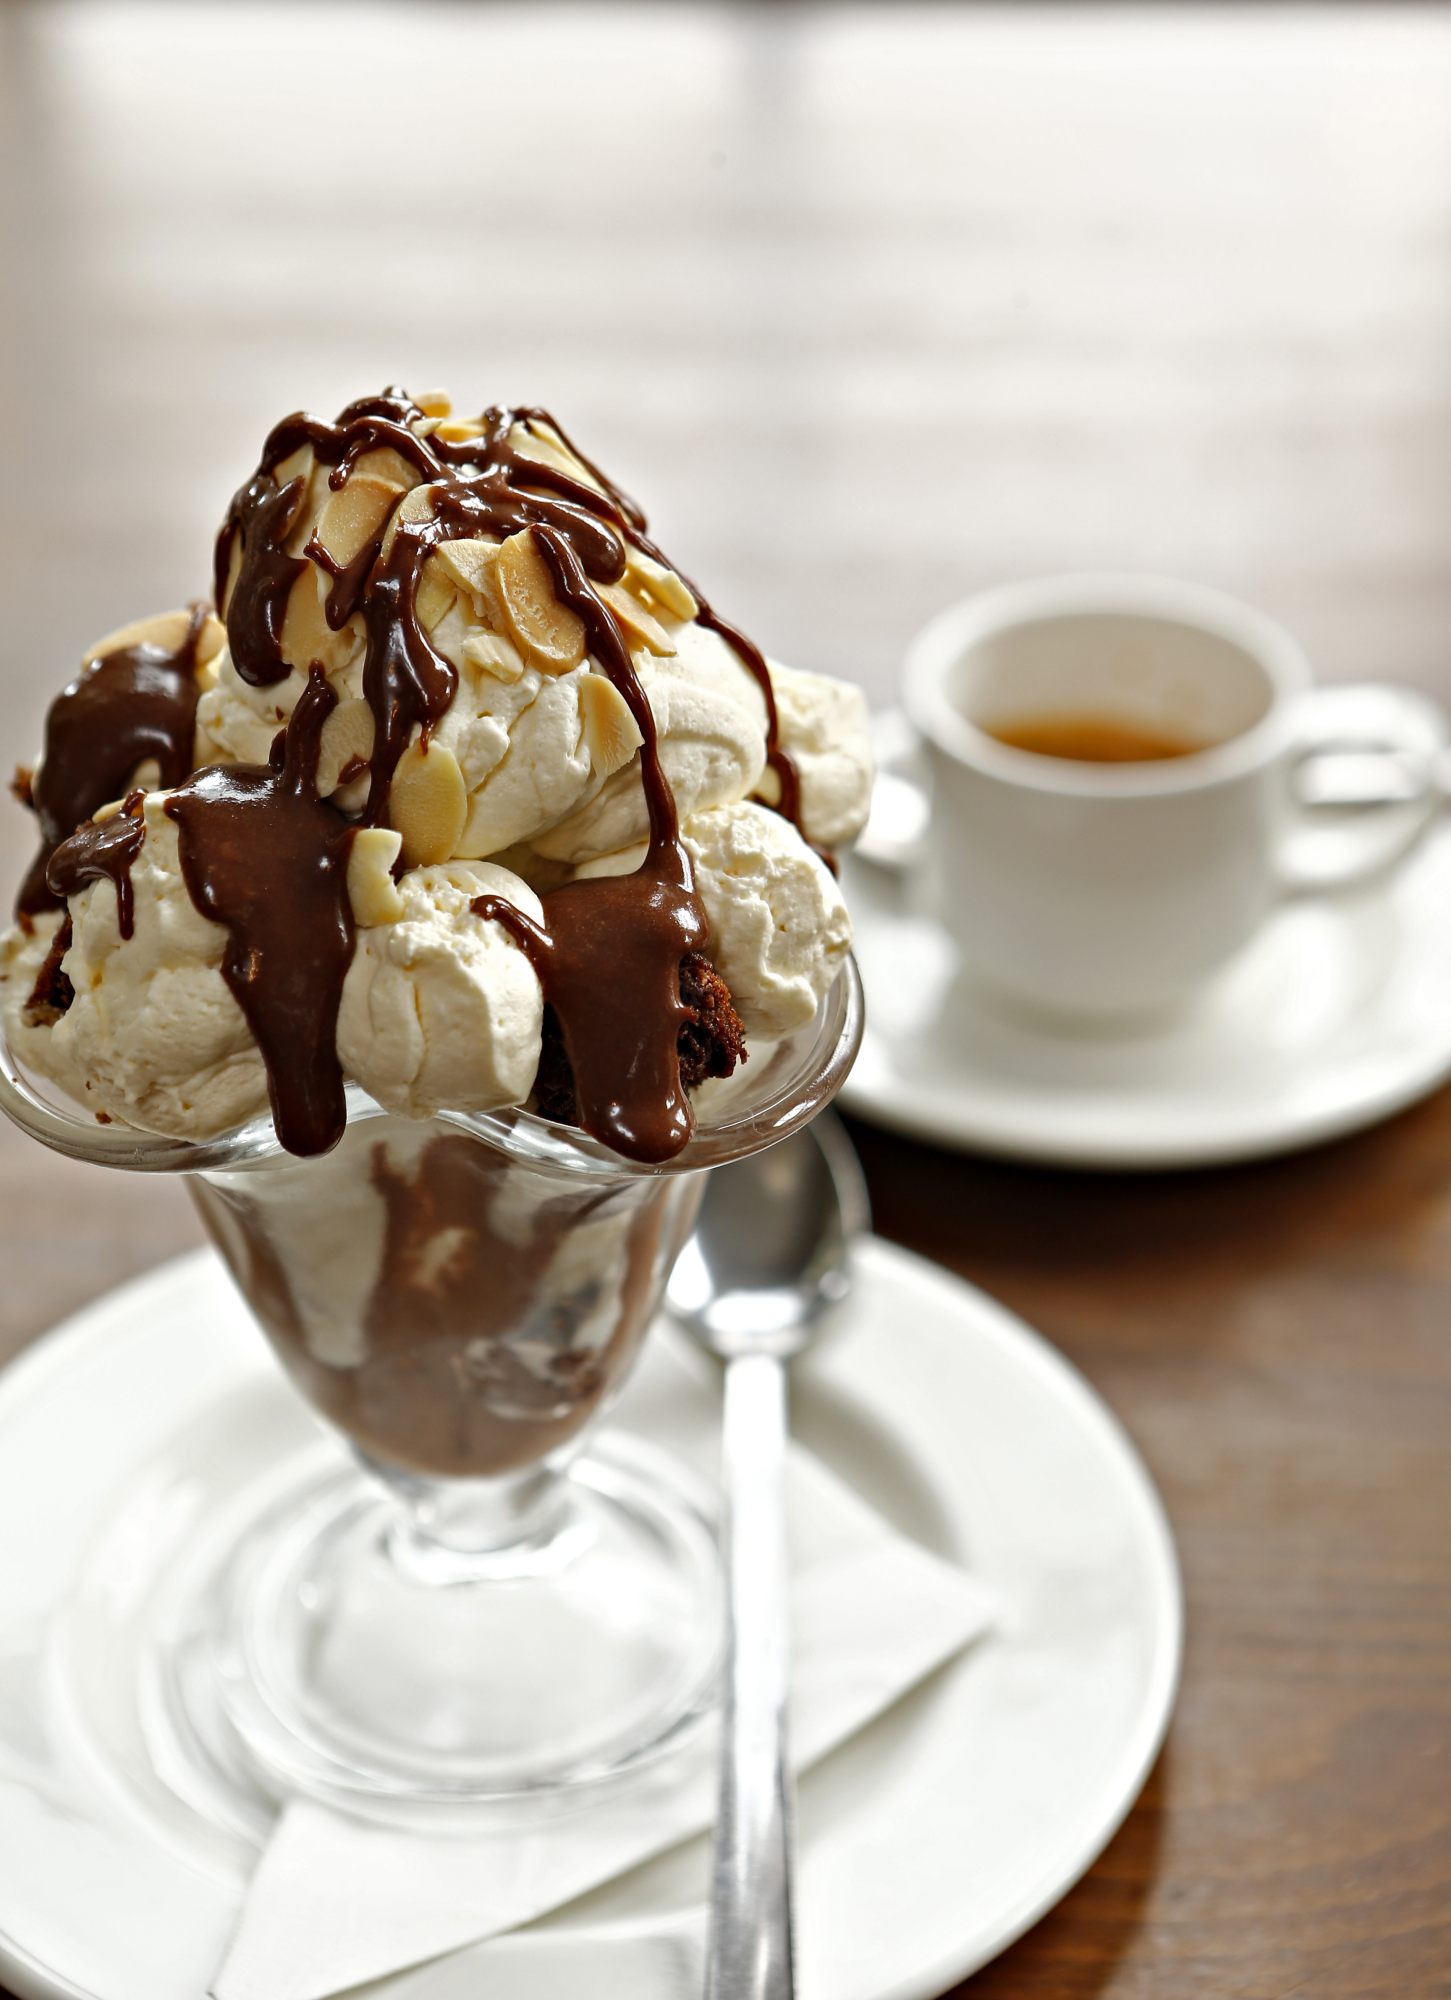 Ice cream sundae with chocolate sauce beside cup of coffee